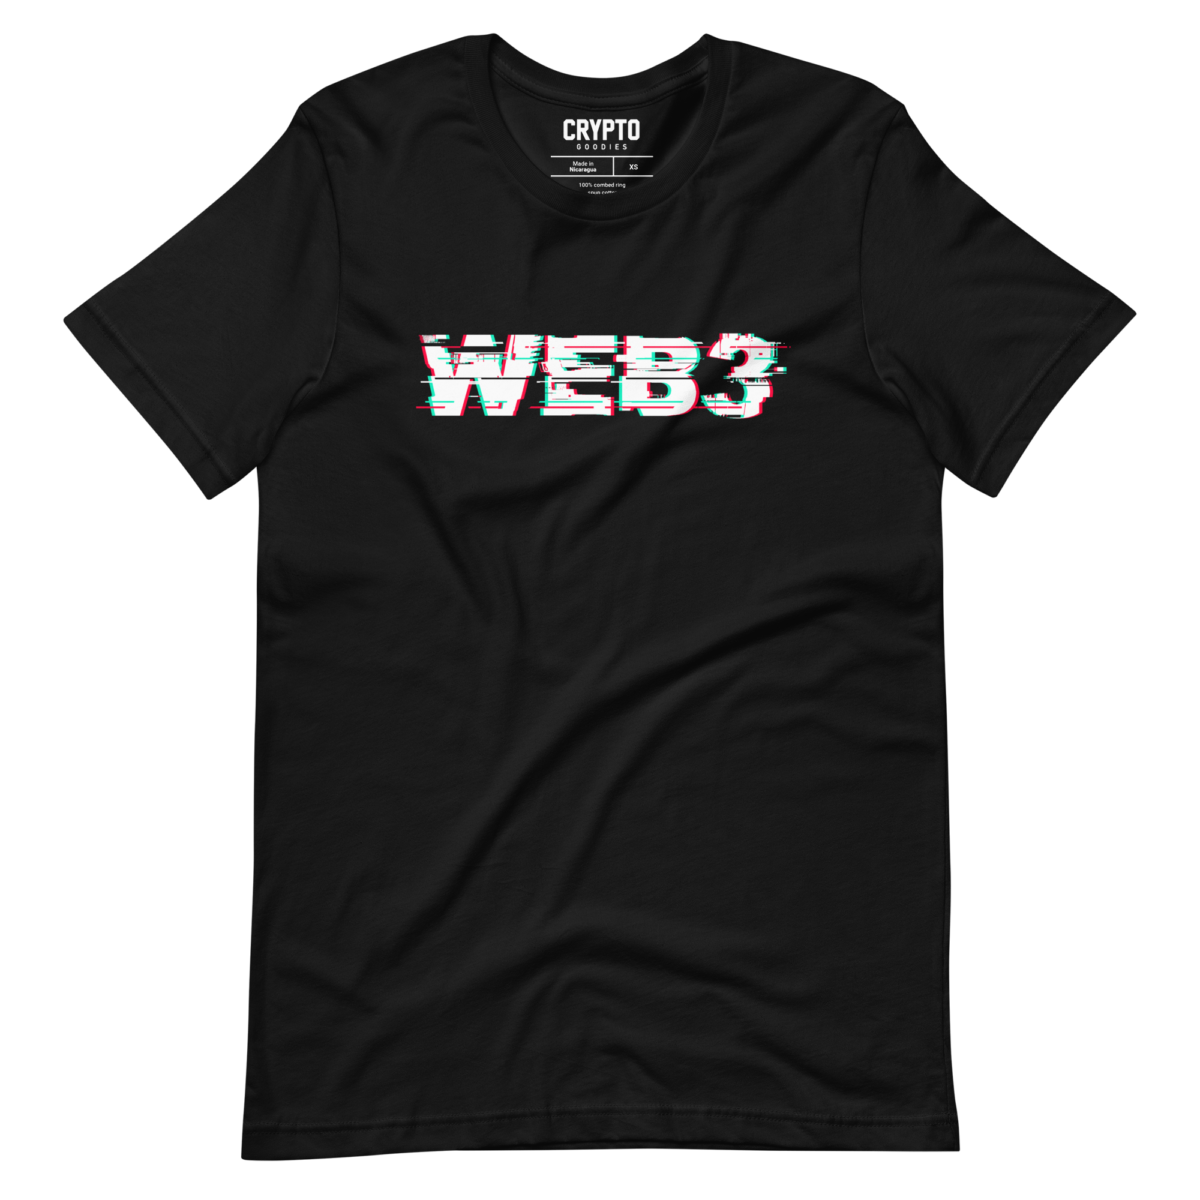 unisex staple t shirt black front 63ac6bc214c34 - WEB3 Glitch T-Shirt